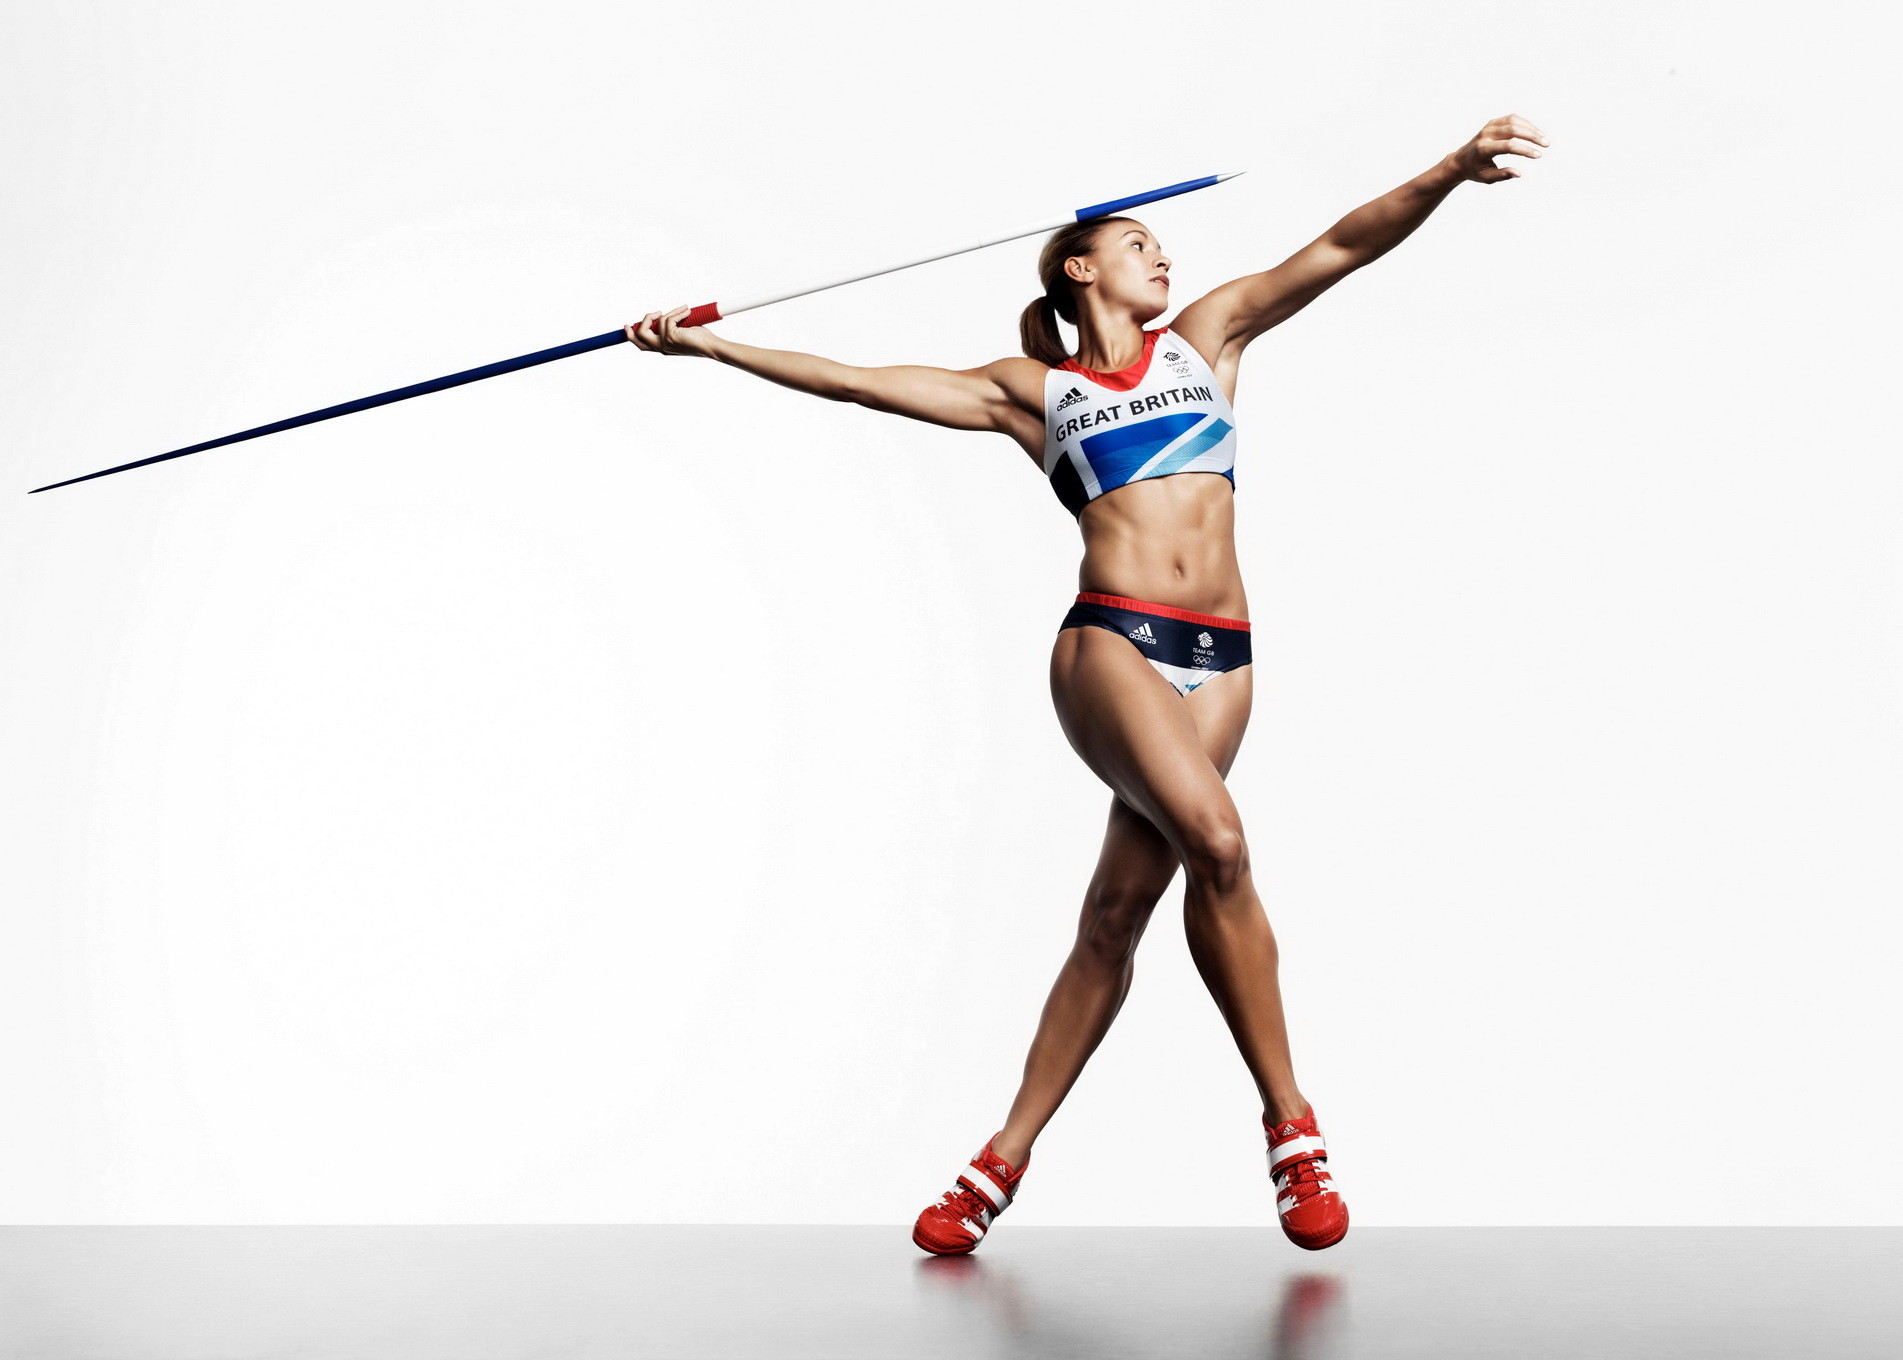 Jessica ennis in posa in abiti sexy sport per 2012 gb olympic team photoshoot
 #75251542